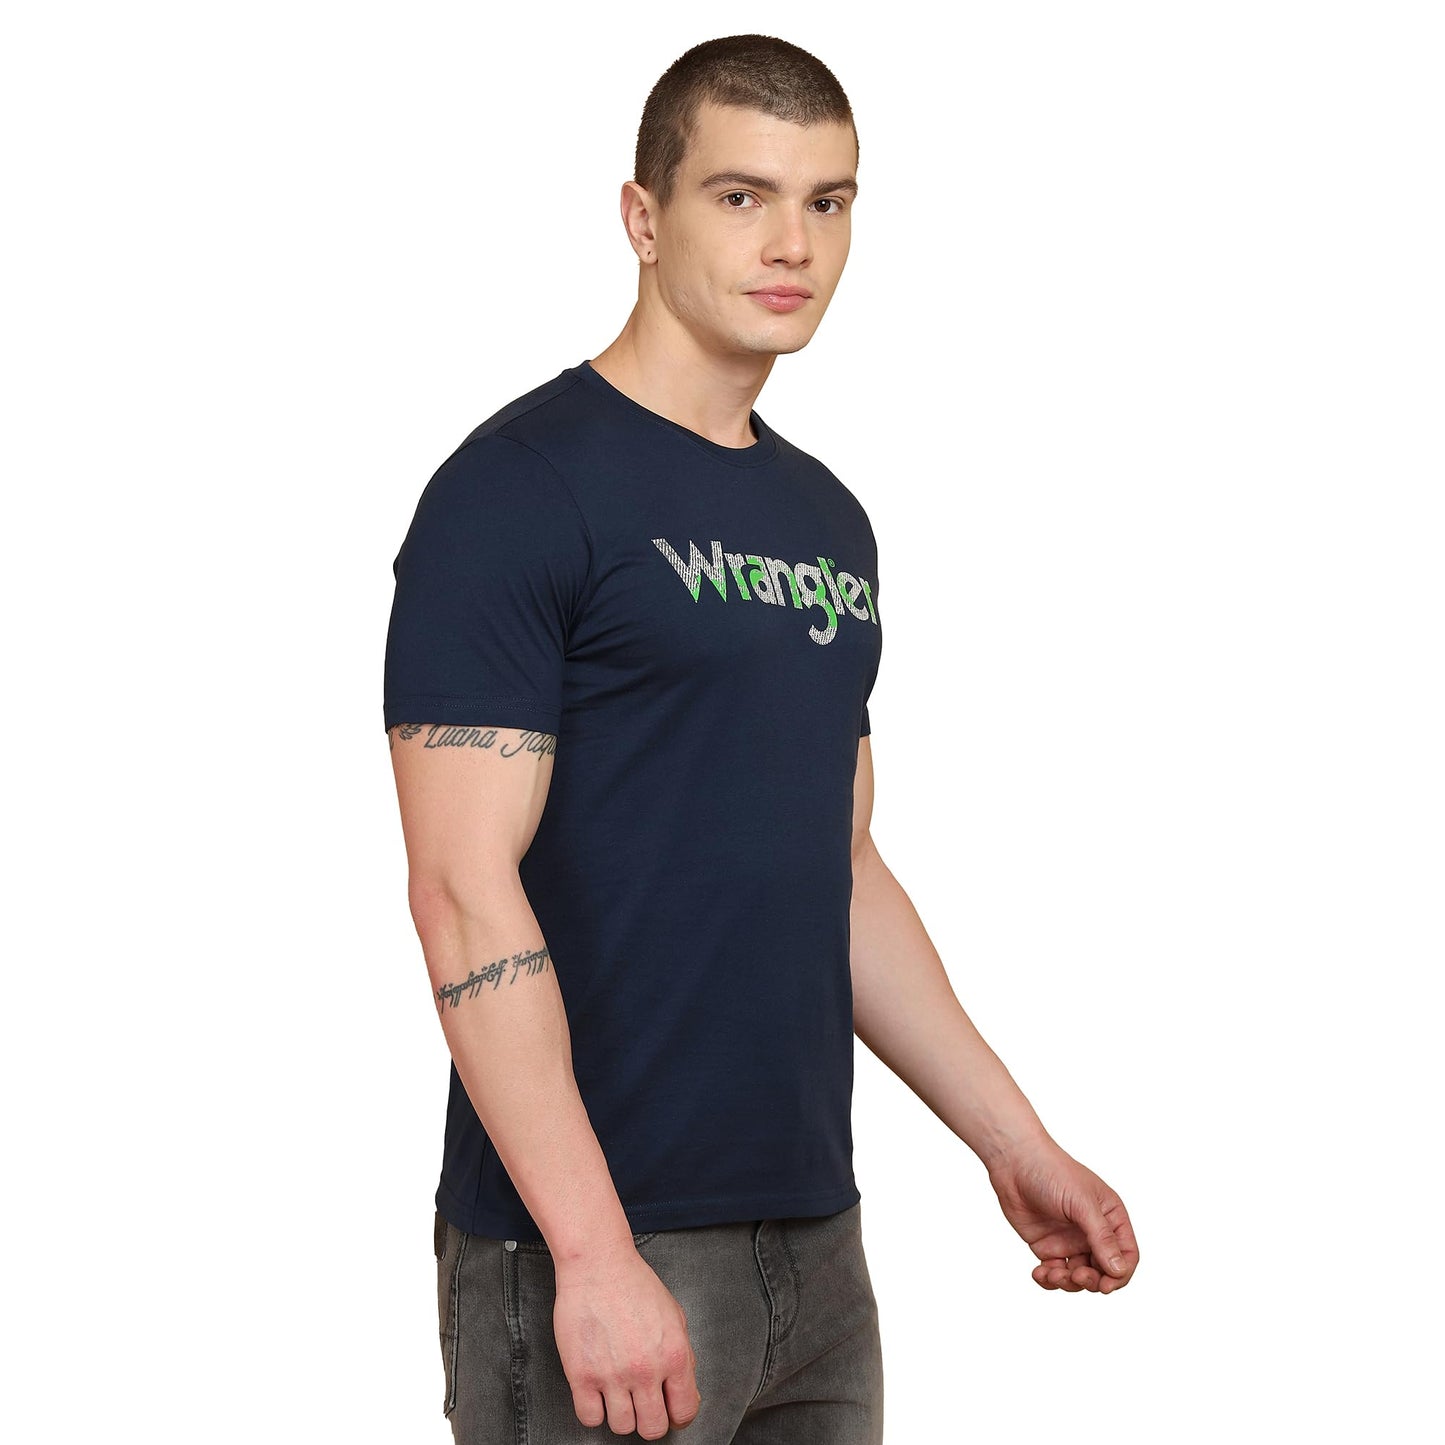 Wrangler Men's Solid Regular Fit Shirt (WMTS006313_Blue